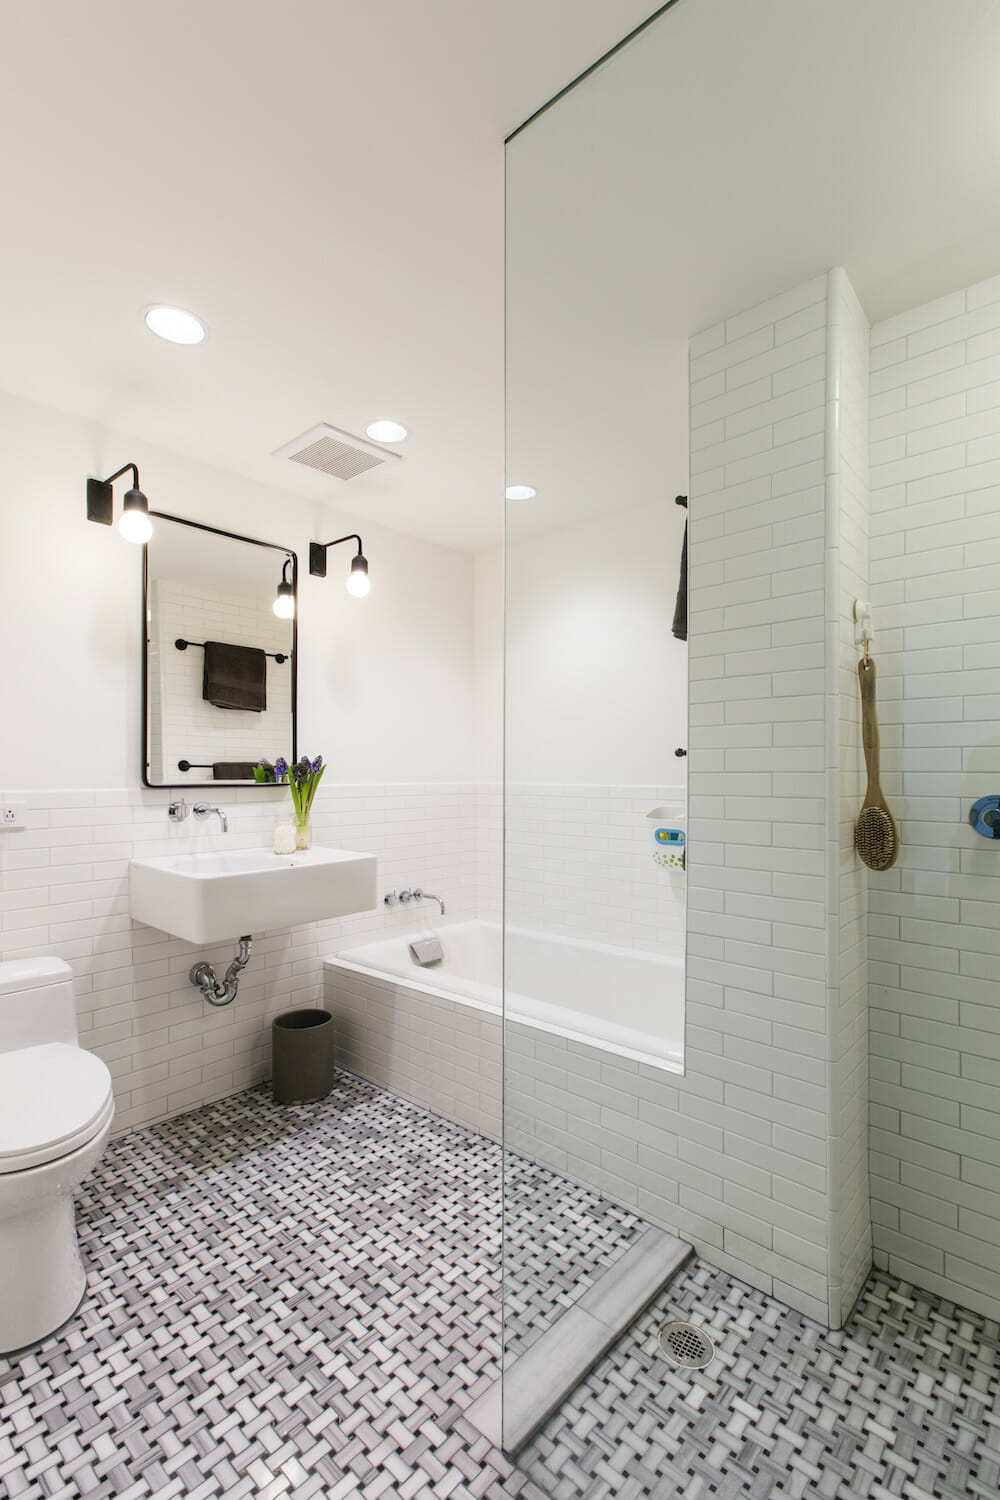 Top 5 Styles Of Bathroom Floor Tiles, Penny Tile Bathroom Floor Images